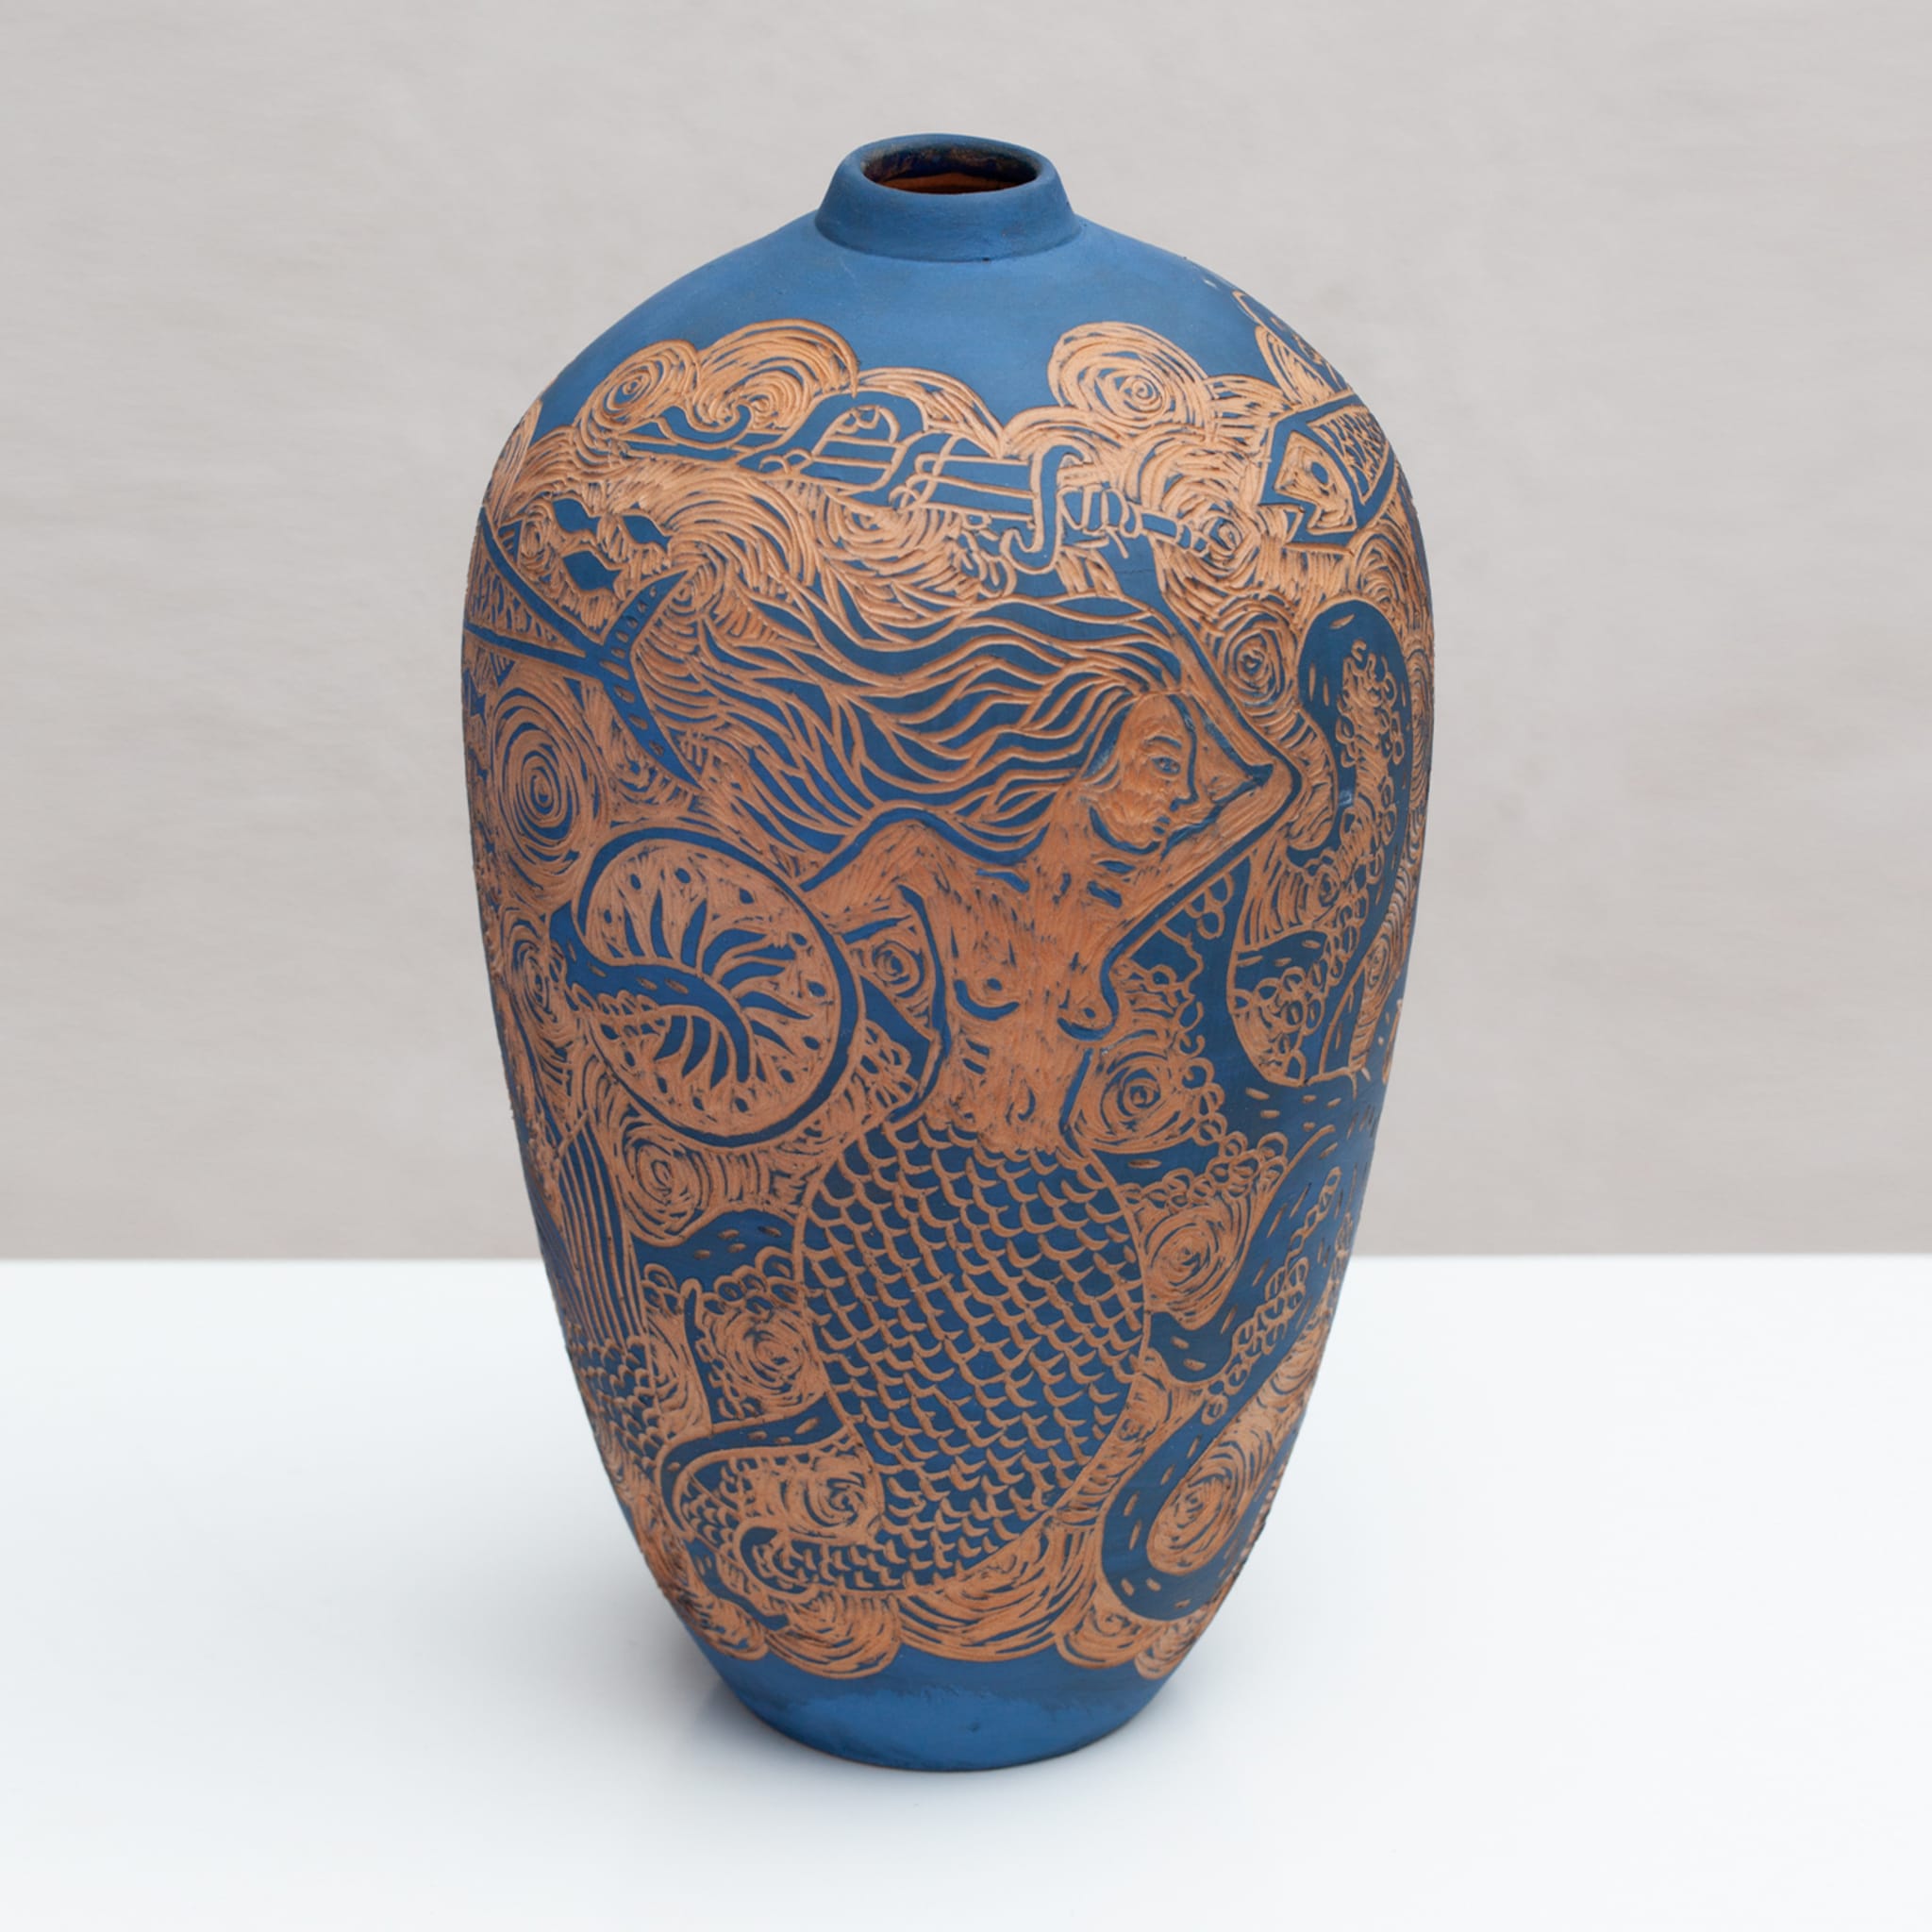 La Sirena Guerriera Blue Vase by Clara Holt and Chiara Zoppei - Alternative view 1